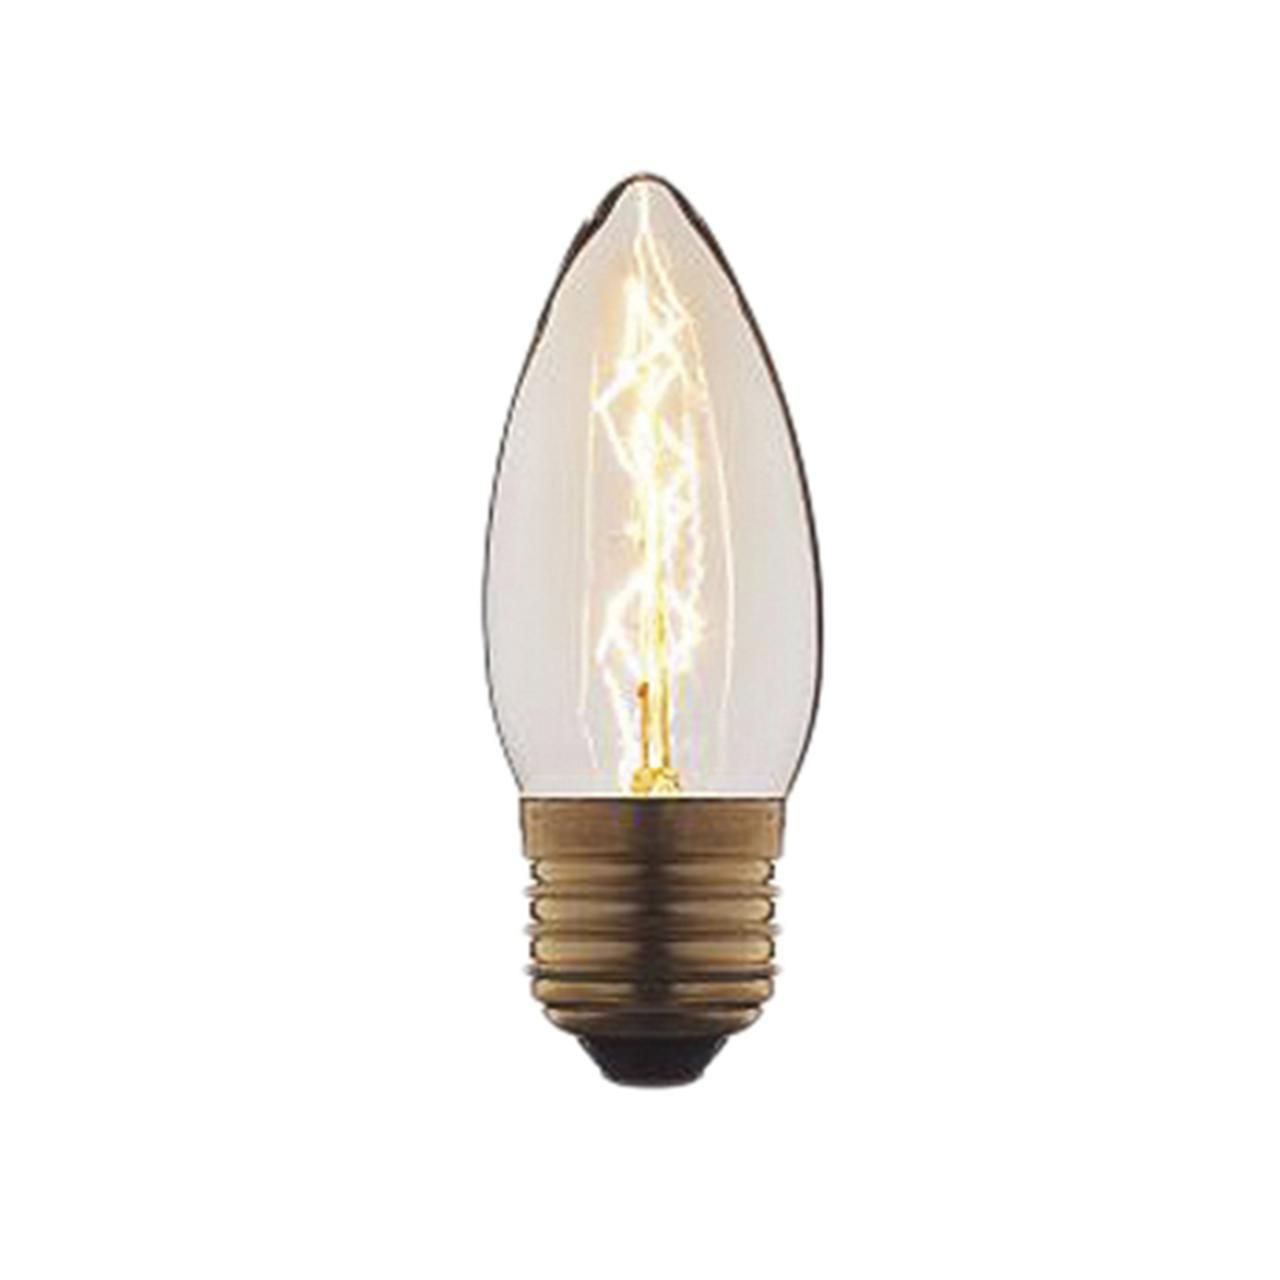 Ретро лампа Эдисона (Свеча) E27 40W 220V Edison Bulb